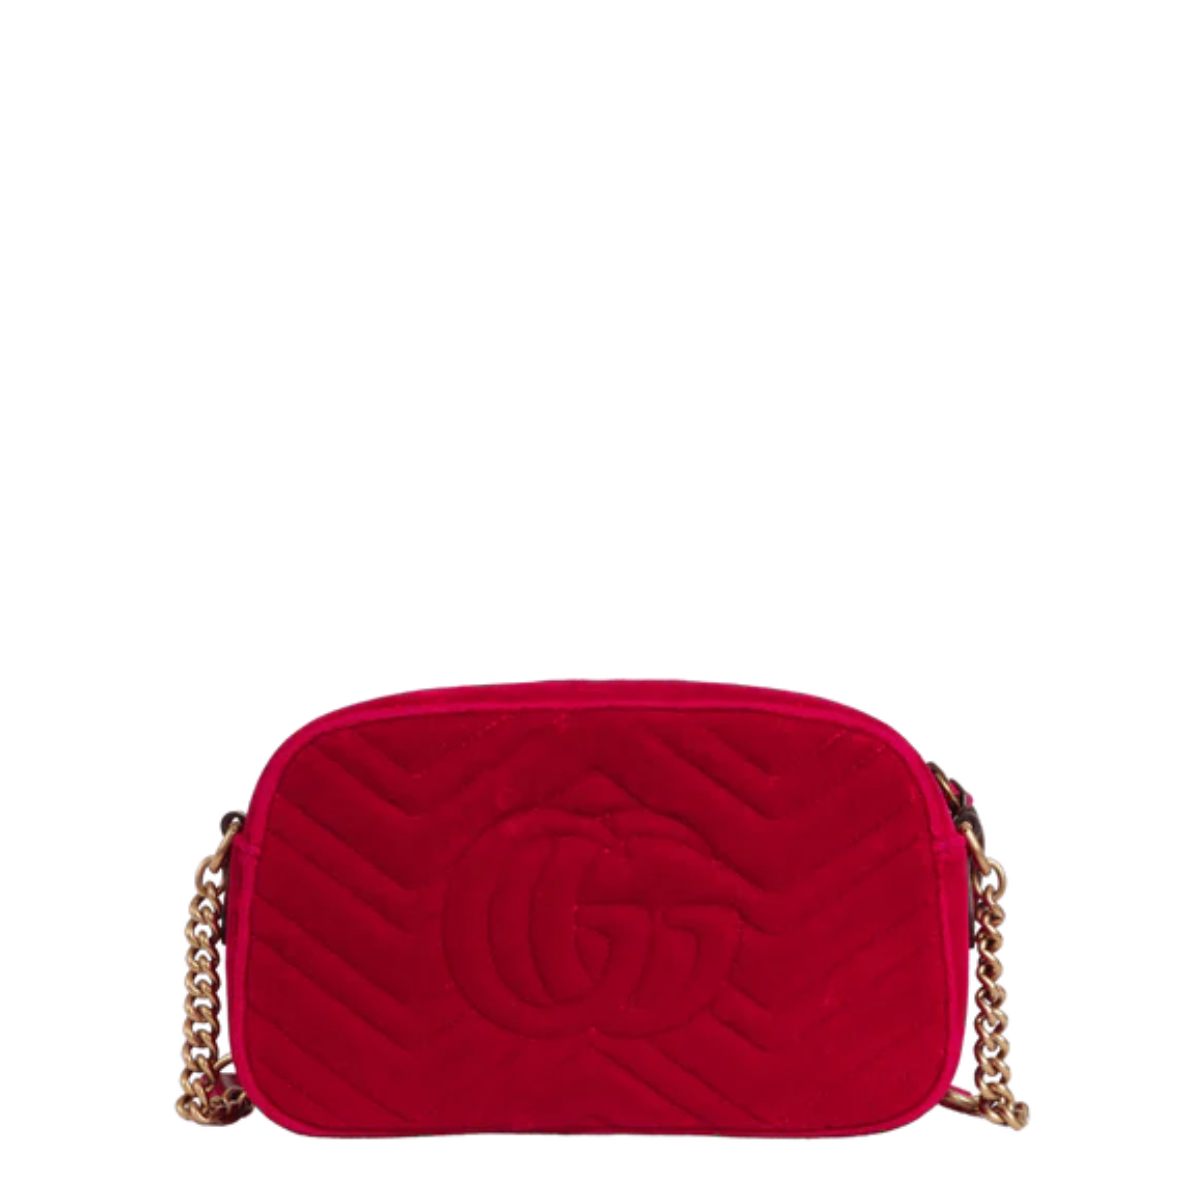 Bolsa Gucci Marmont Veludo Vermelha